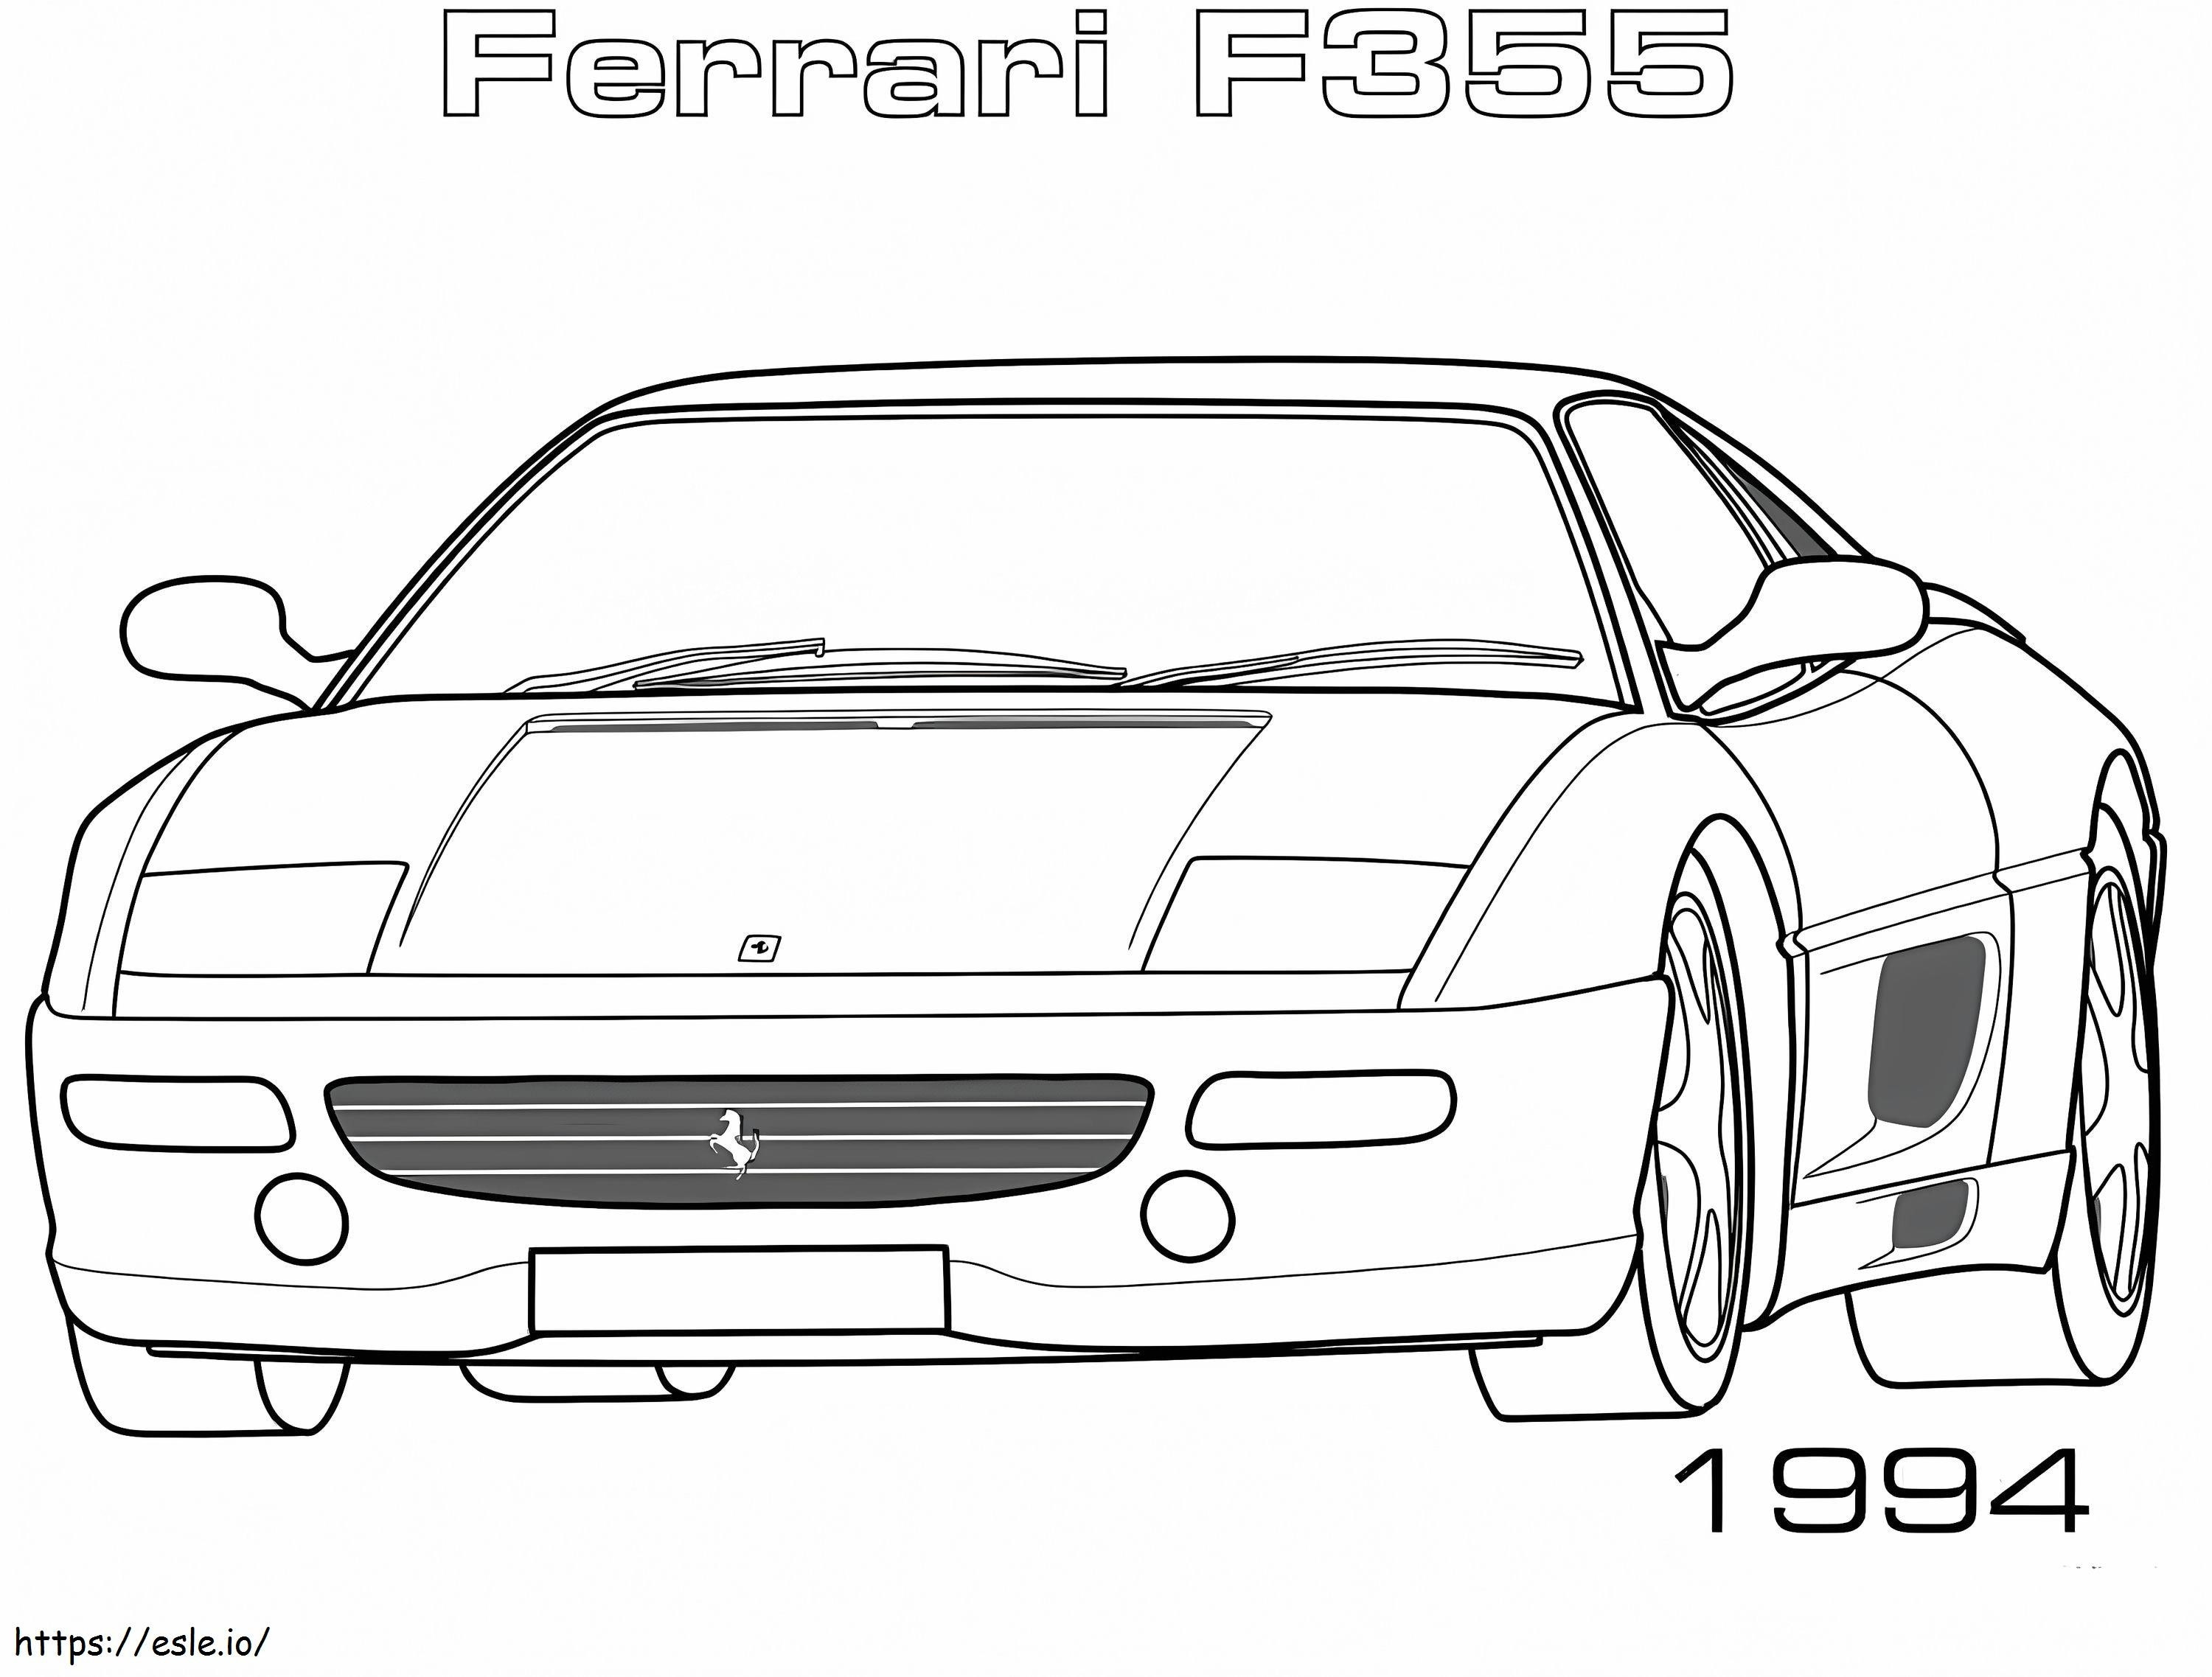 1994 Ferrari F355 boyama